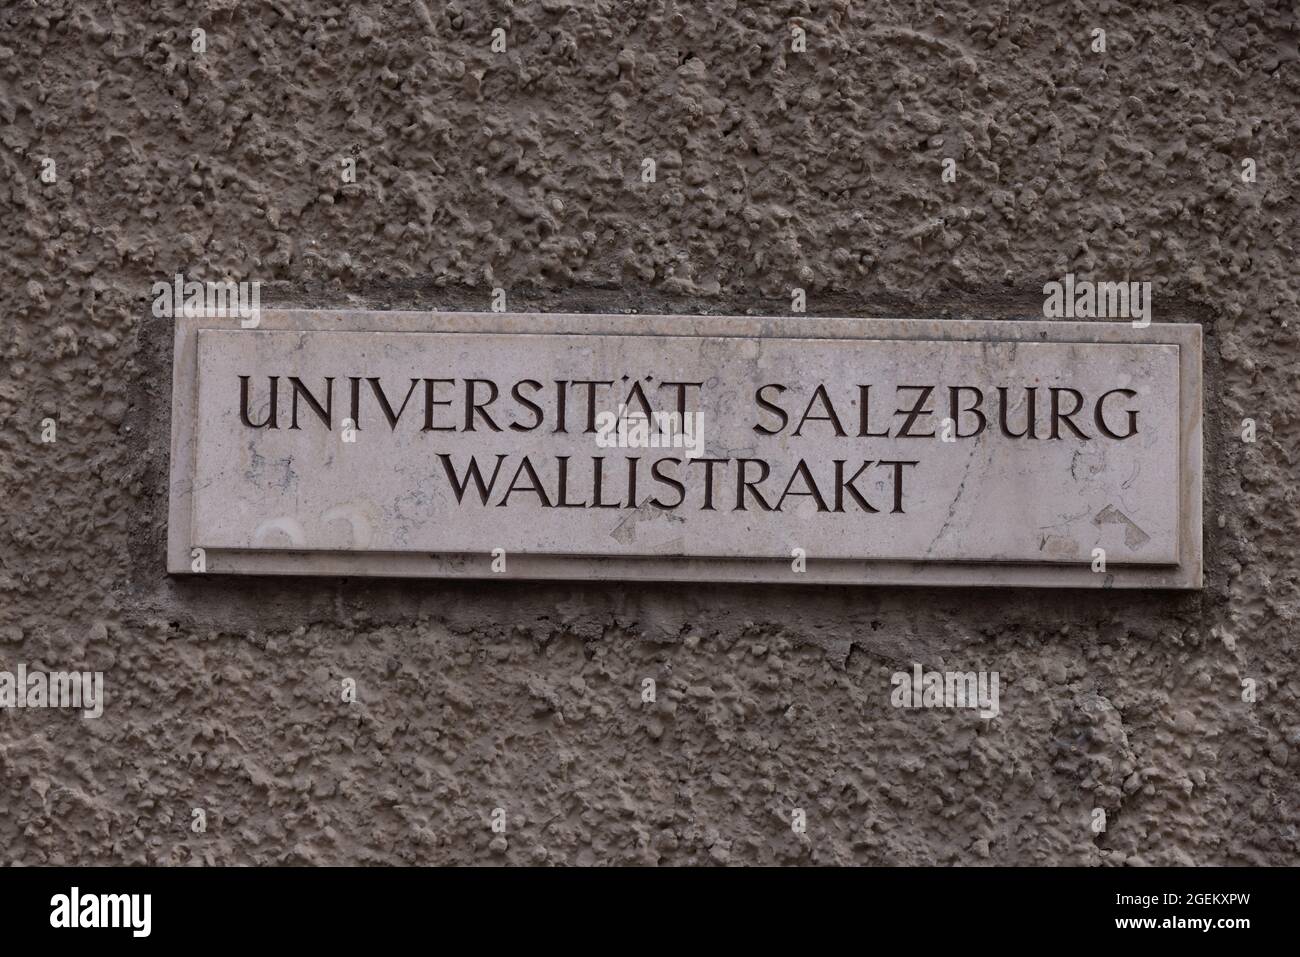 University of Salzburg Wallistrakt in the old town Stock Photo